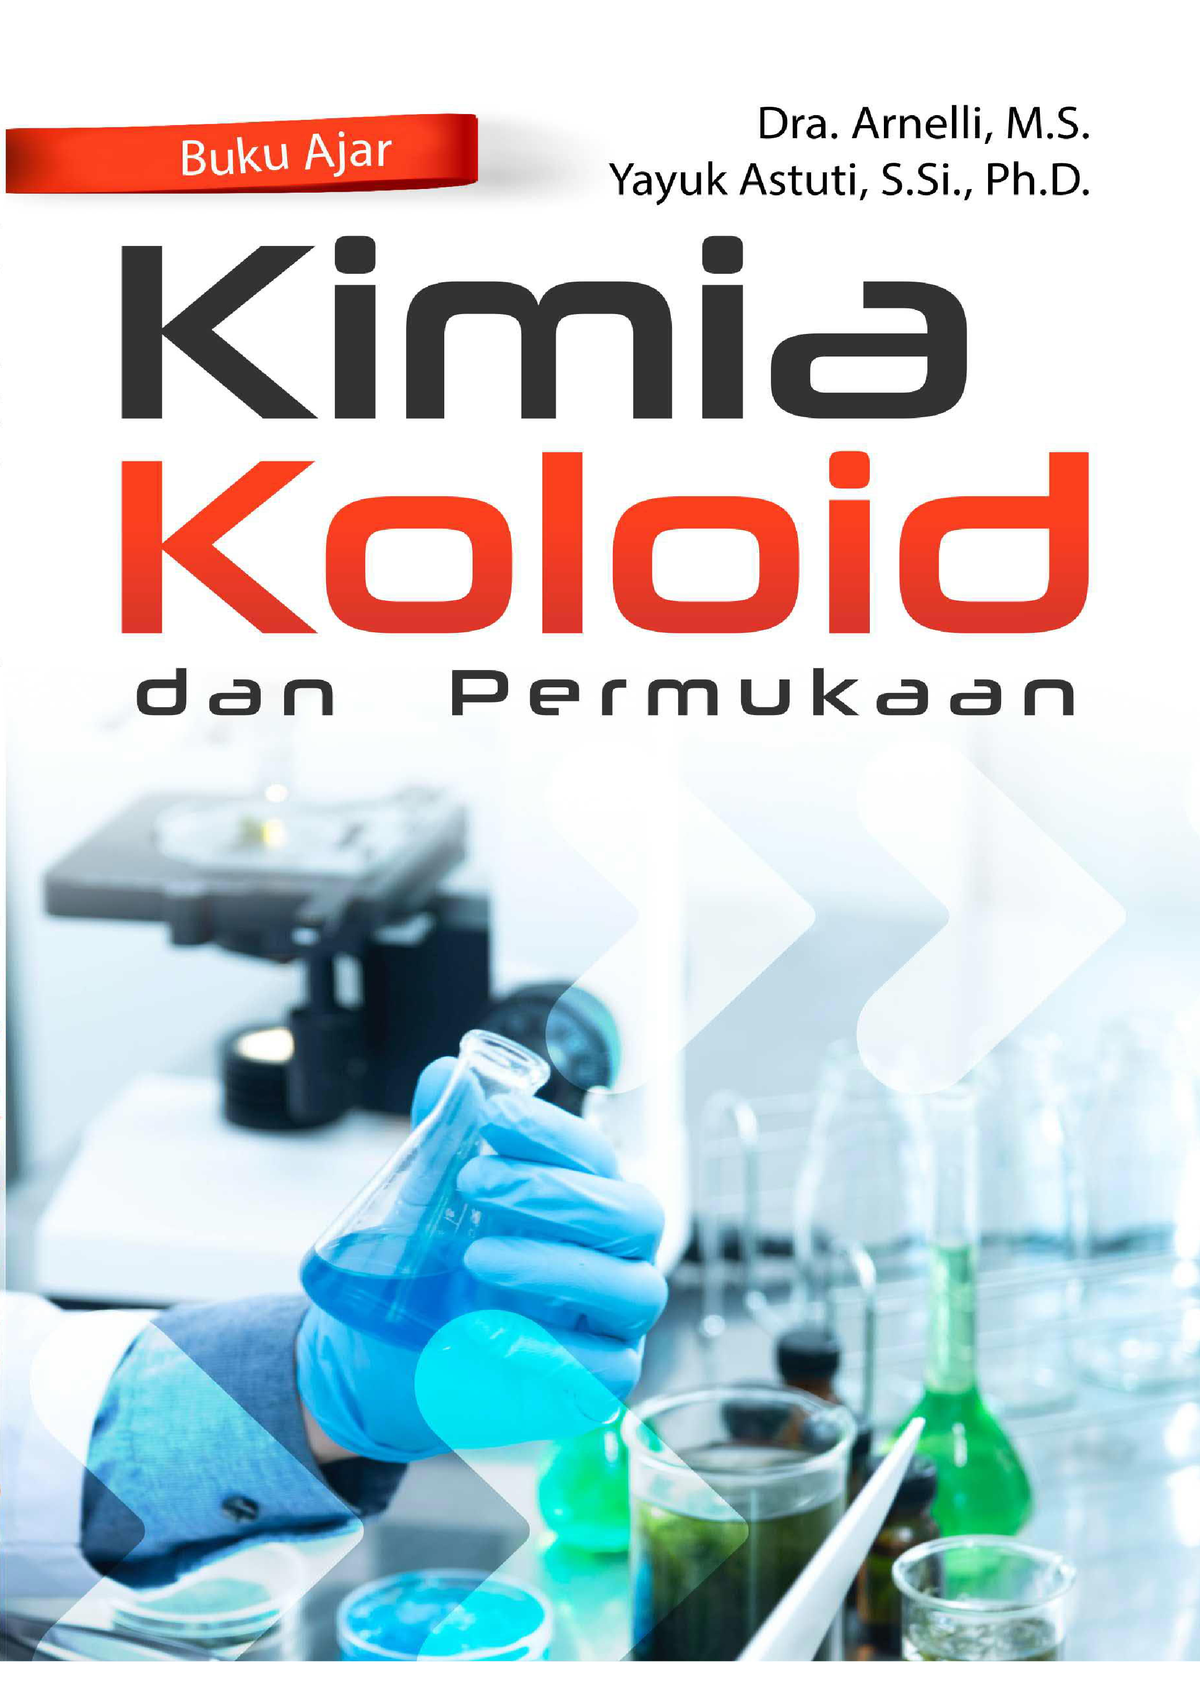 Lampiran B46 Buku Ajar Kimia Koloid Yayuk Astuti Kimia Buku Ajar